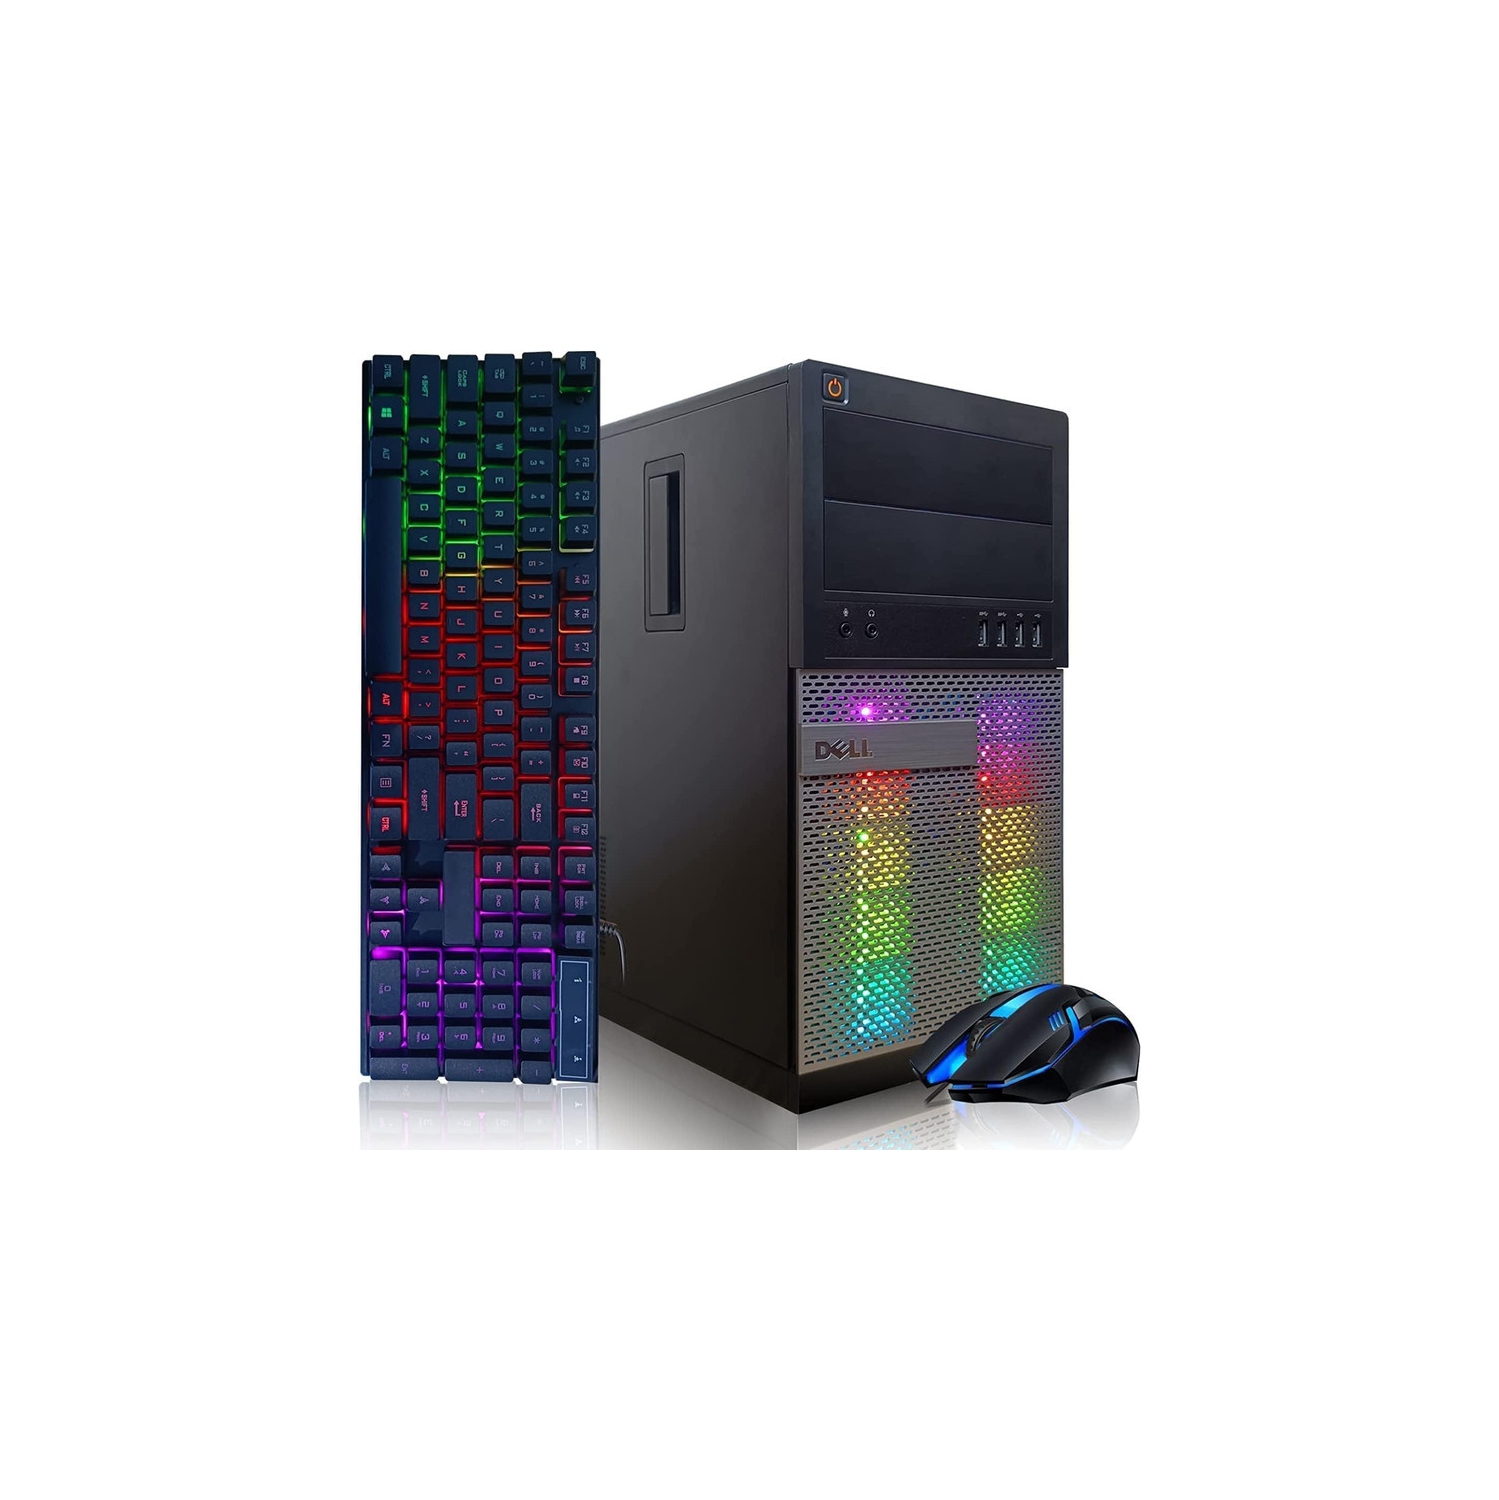 Dell RGB Gaming Desktop Computer, Intel Quad Core I7 up to 3.9GHz, Radeon RX 5500 XT 8G GDDR6, 32GB Memory, 2T SSD, RGB Keyboard & Mouse, 600M WiFi & BT, Win 10 Pro -Refurbished